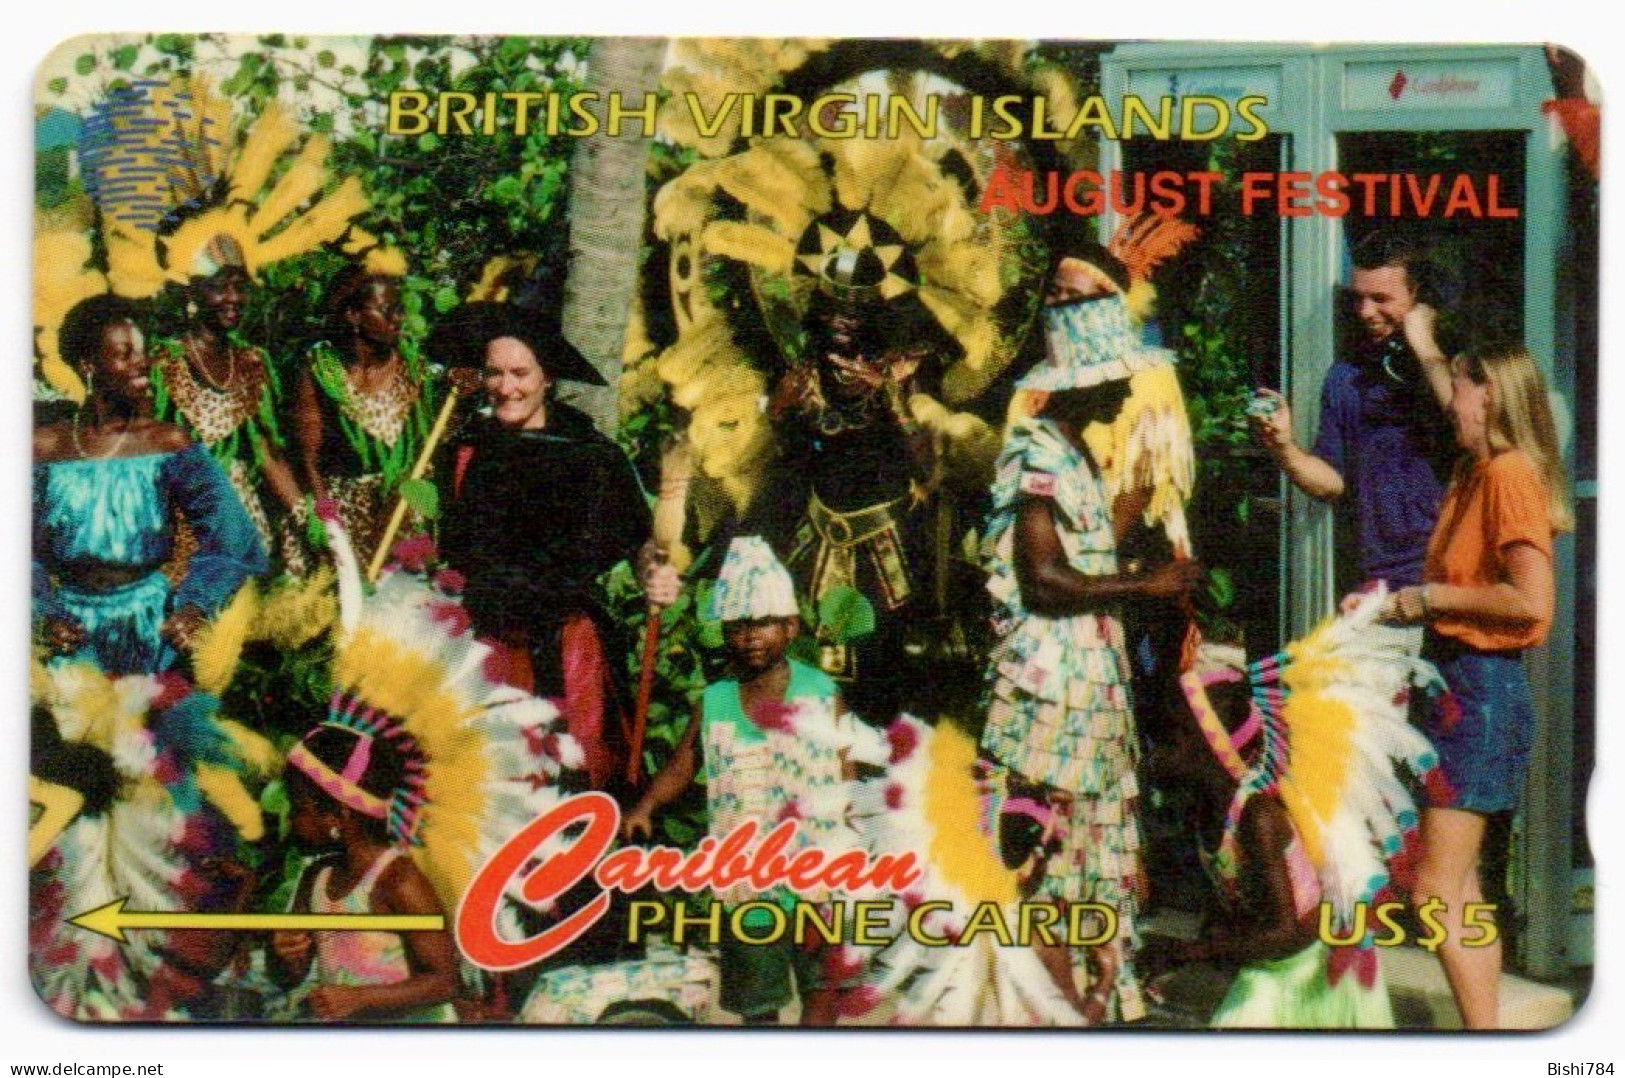 British Virgin Islands - August Festival - 171CBVD - Virgin Islands